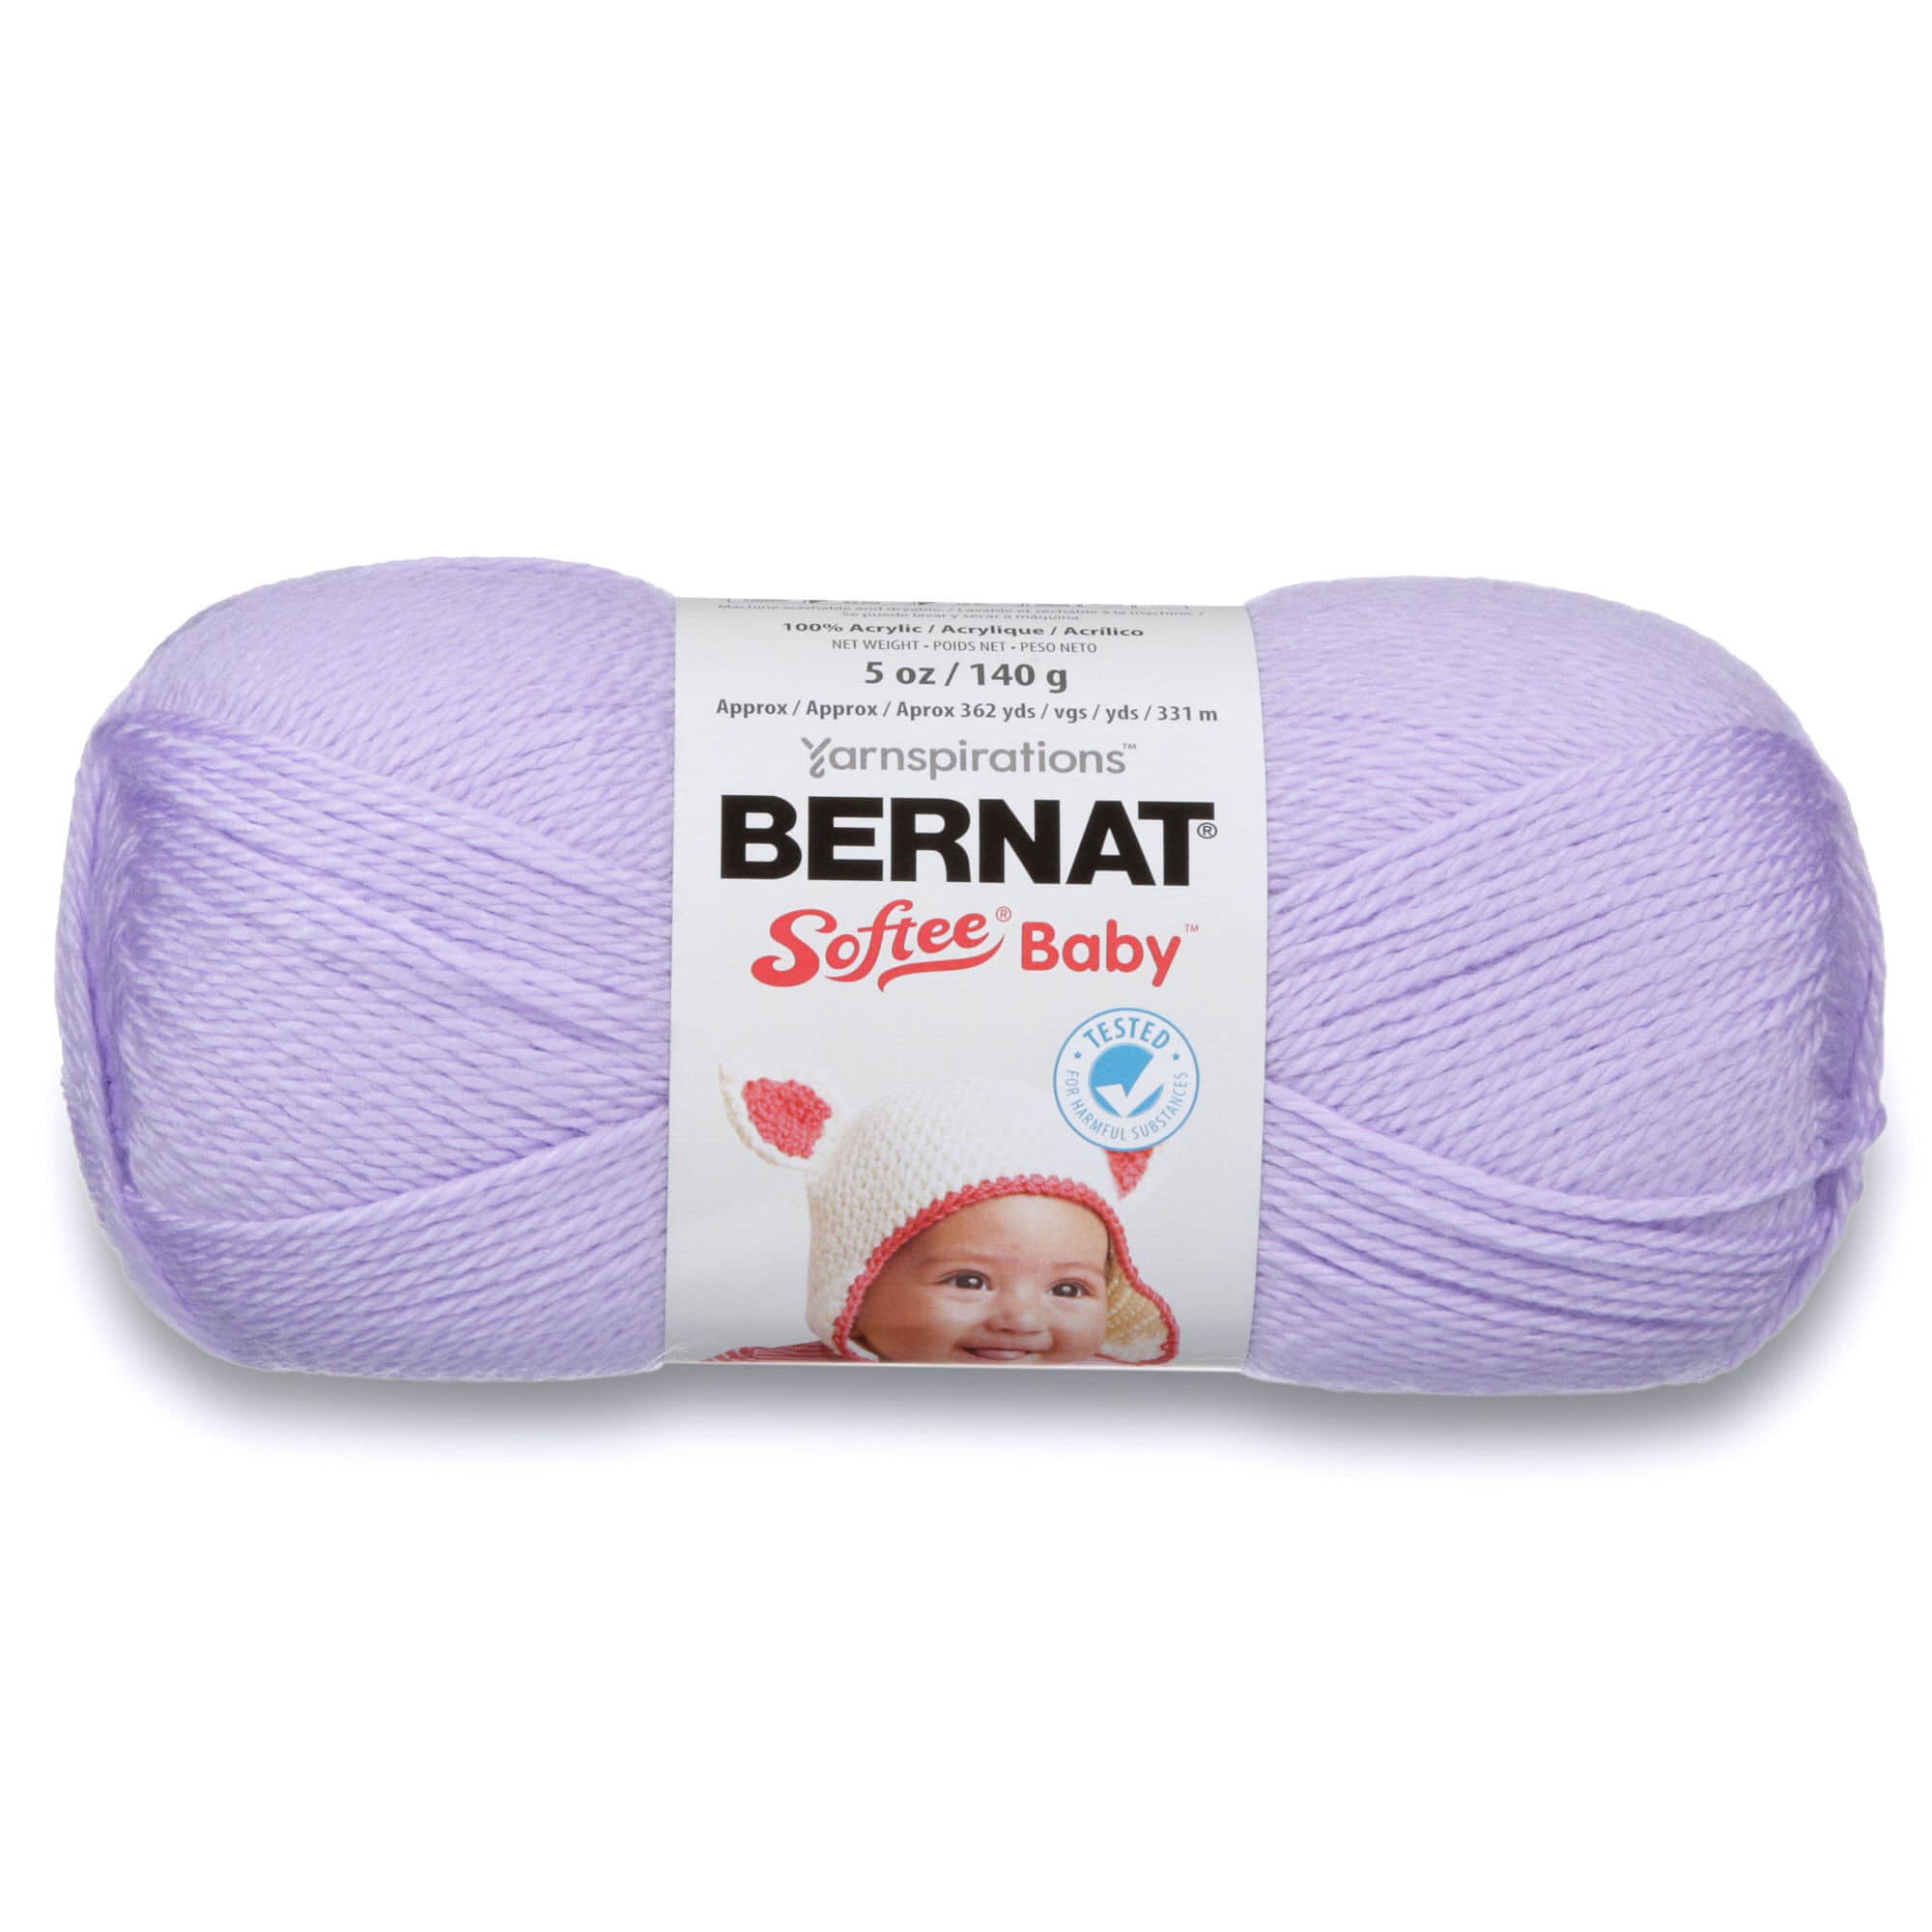  Bernat Softee Baby Yarn, 5 oz, Gauge 3 Light, Navy